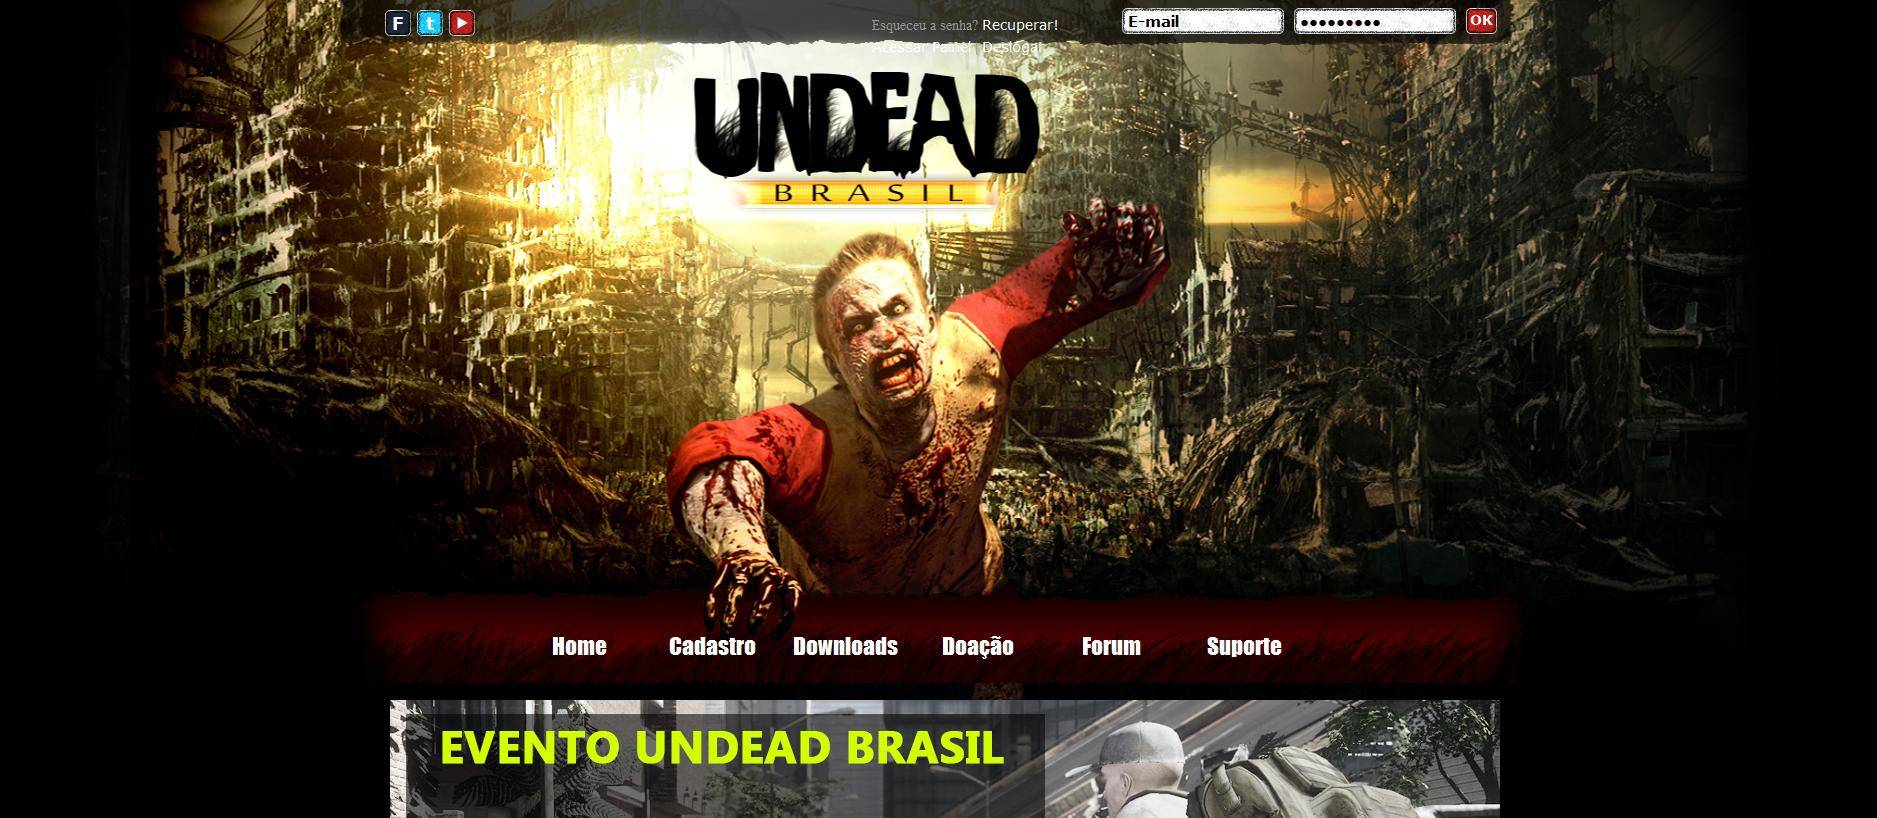 0qffQls - [Infestation] Website Undead Brasil - RaGEZONE Forums